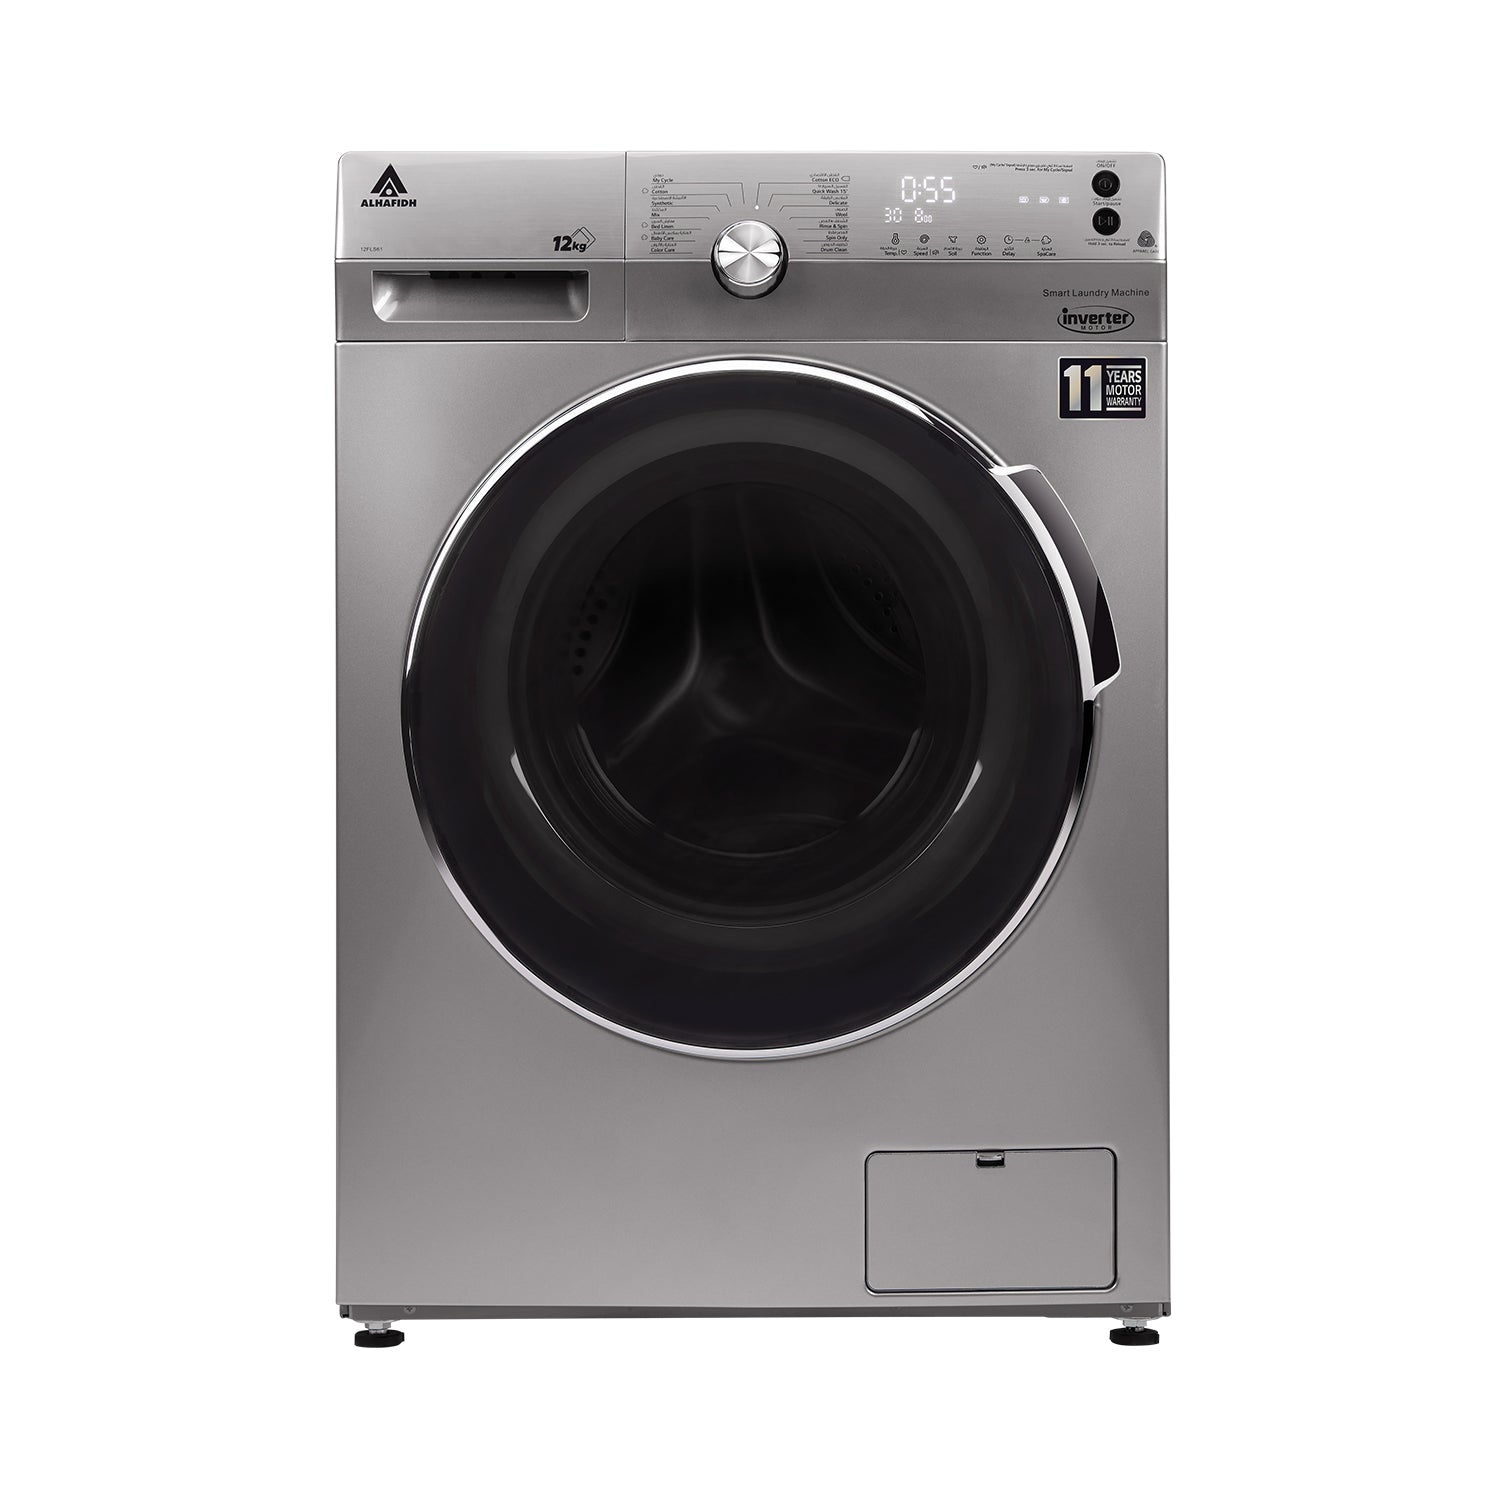 ALHAFIDH12KG Front Loading Washing Machine 12FLS61